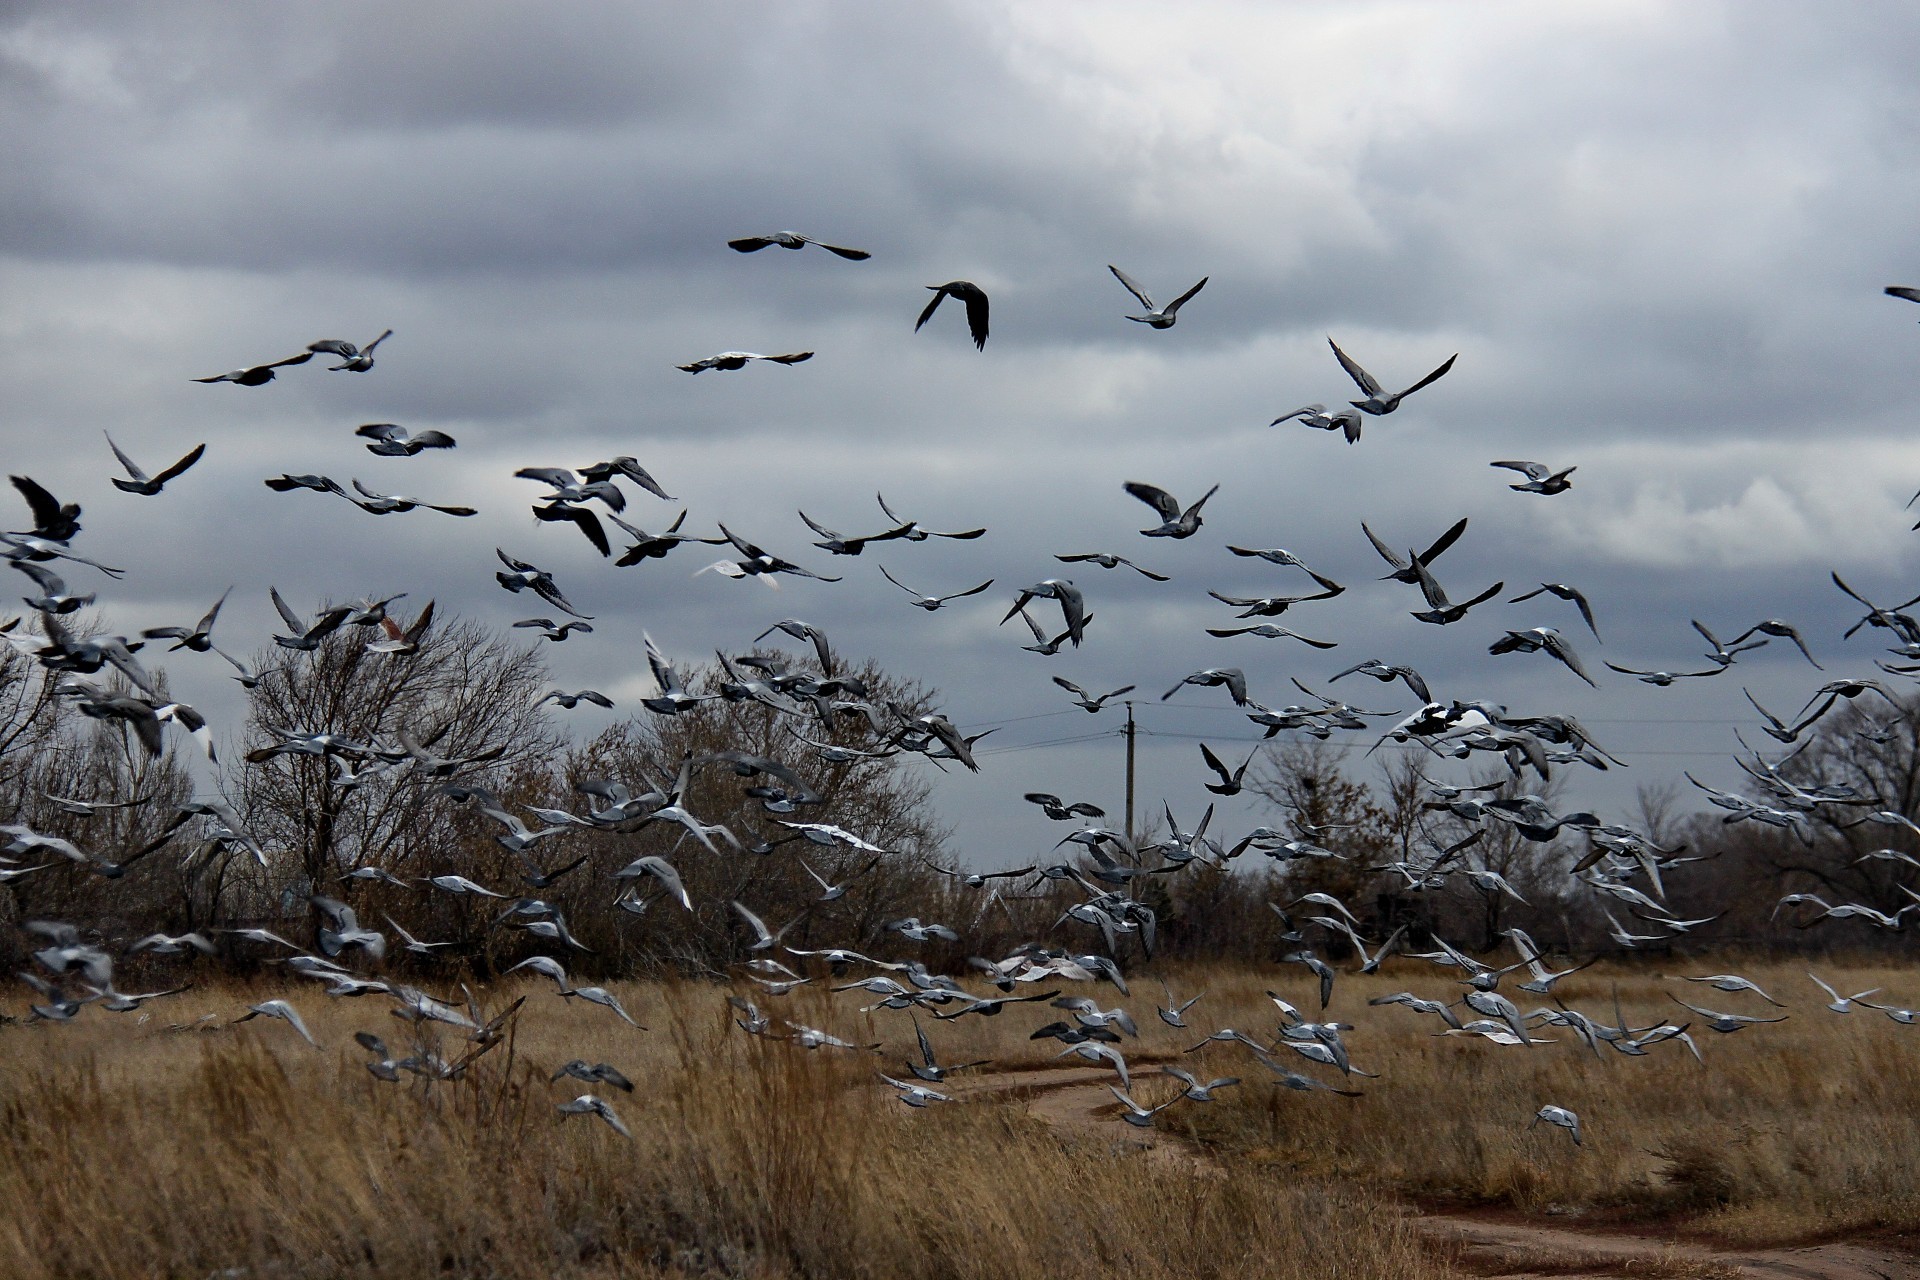 a flock of birds bird wildlife nature goose flight sky seagulls animal outdoors migration waterfowl fly wild landscape water flock marsh lake winter